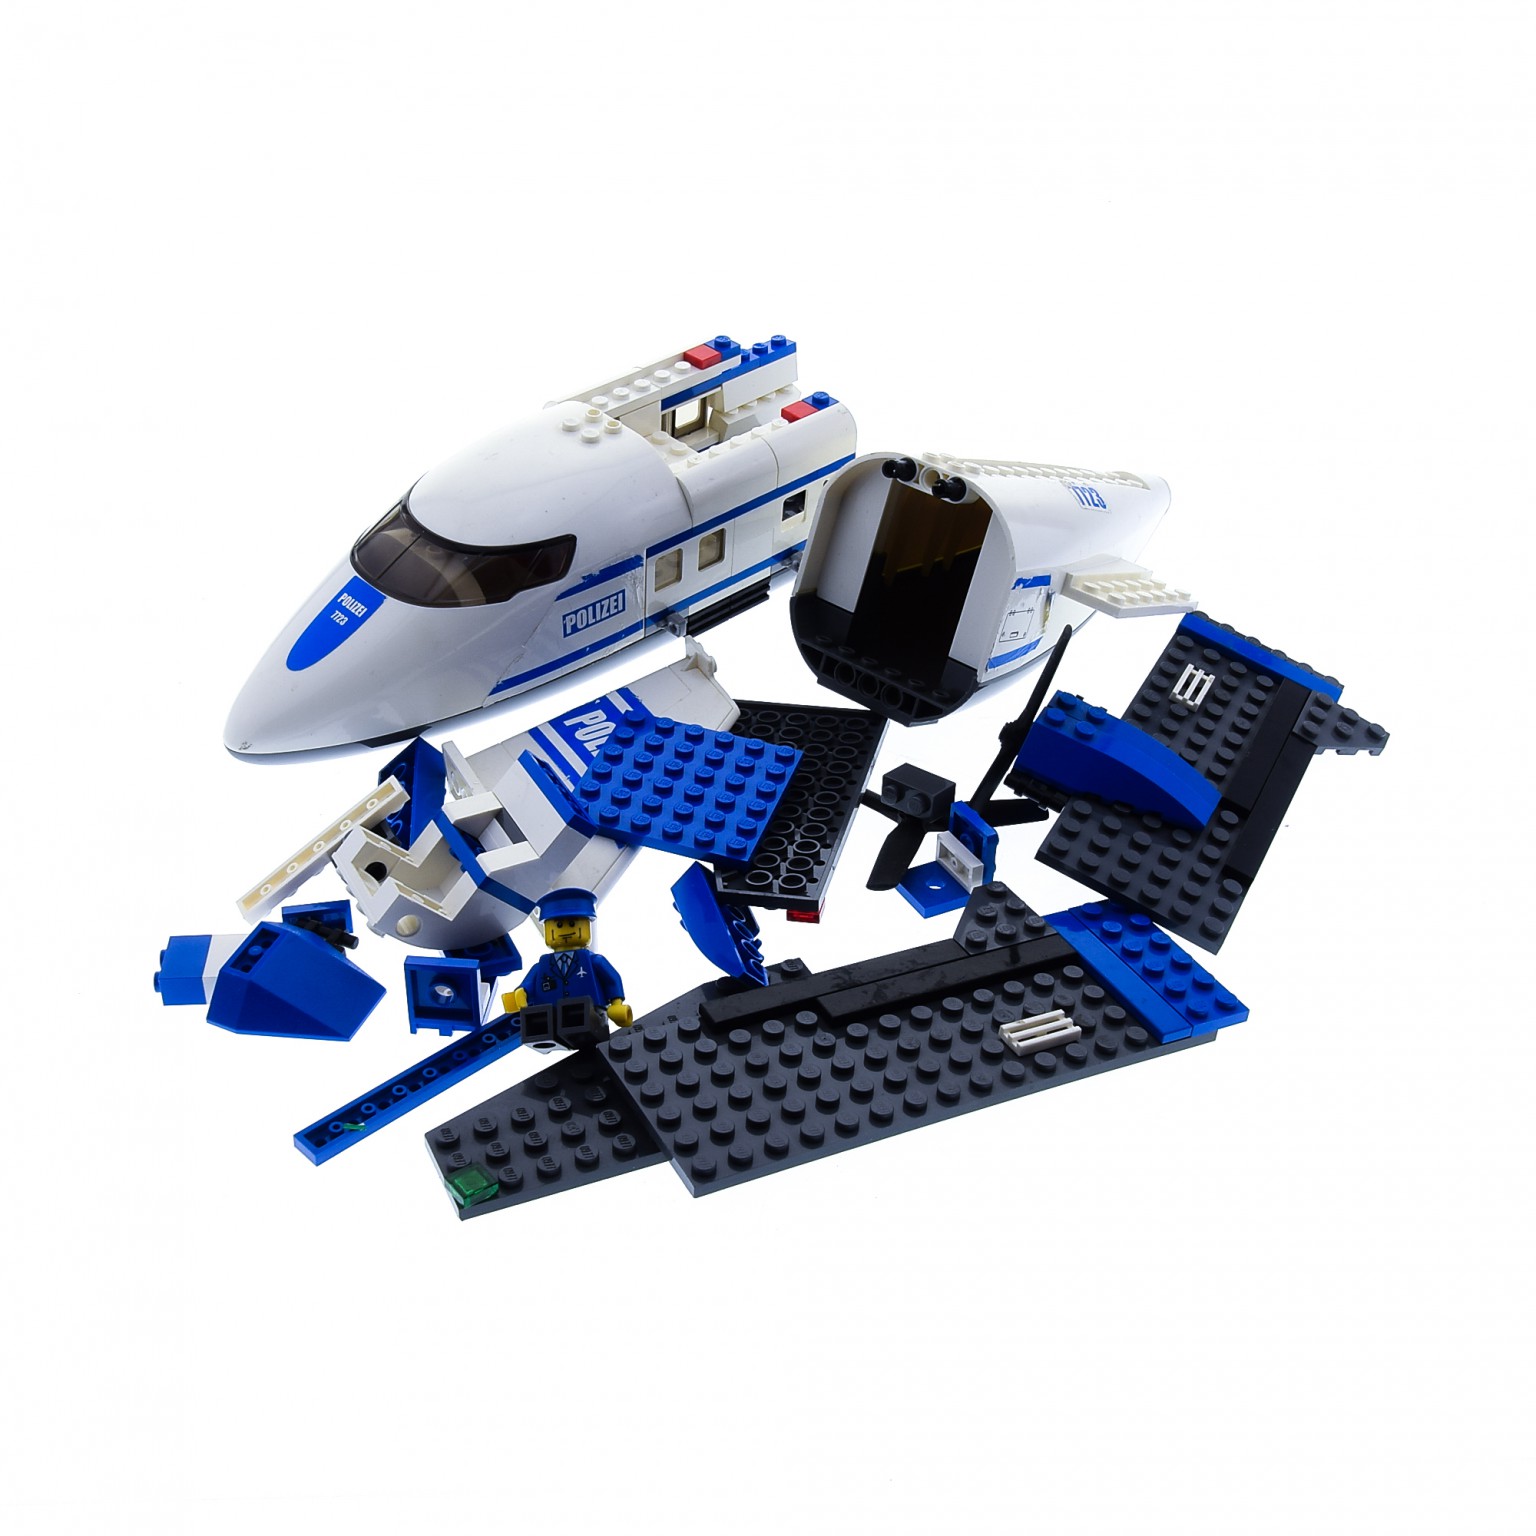 Precut Custom Replacement Stickers for Lego Set 7723 Police Pontoon Plane 